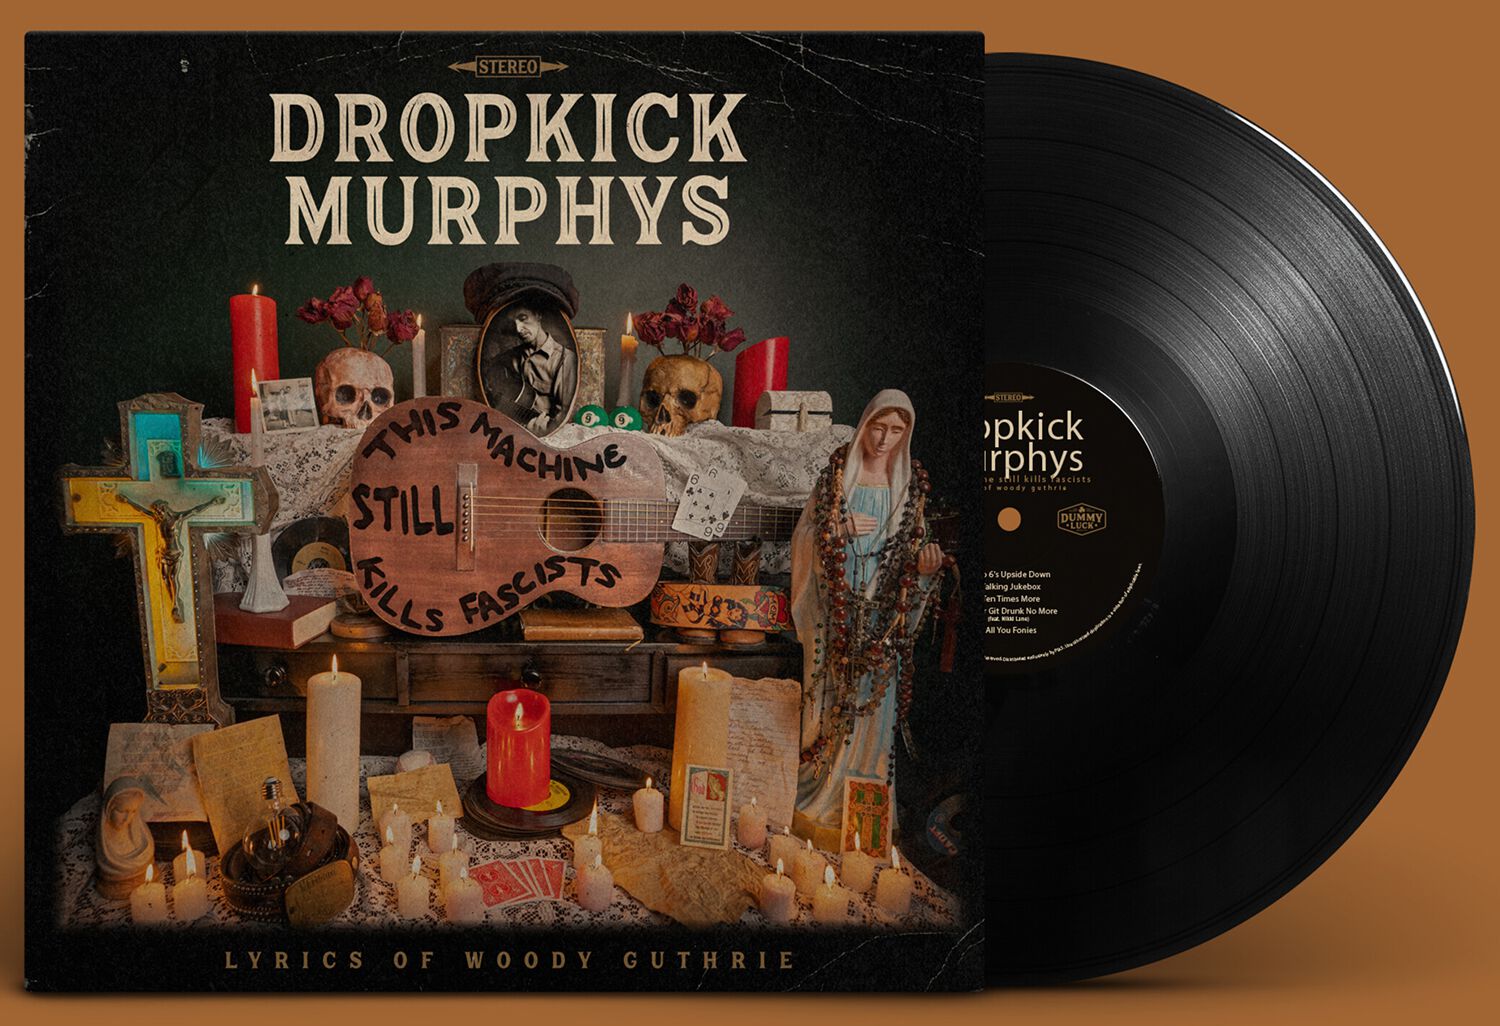 Dropkick Murphys feat. Woody Guthrie - This machine still kills fascists LP multicolor